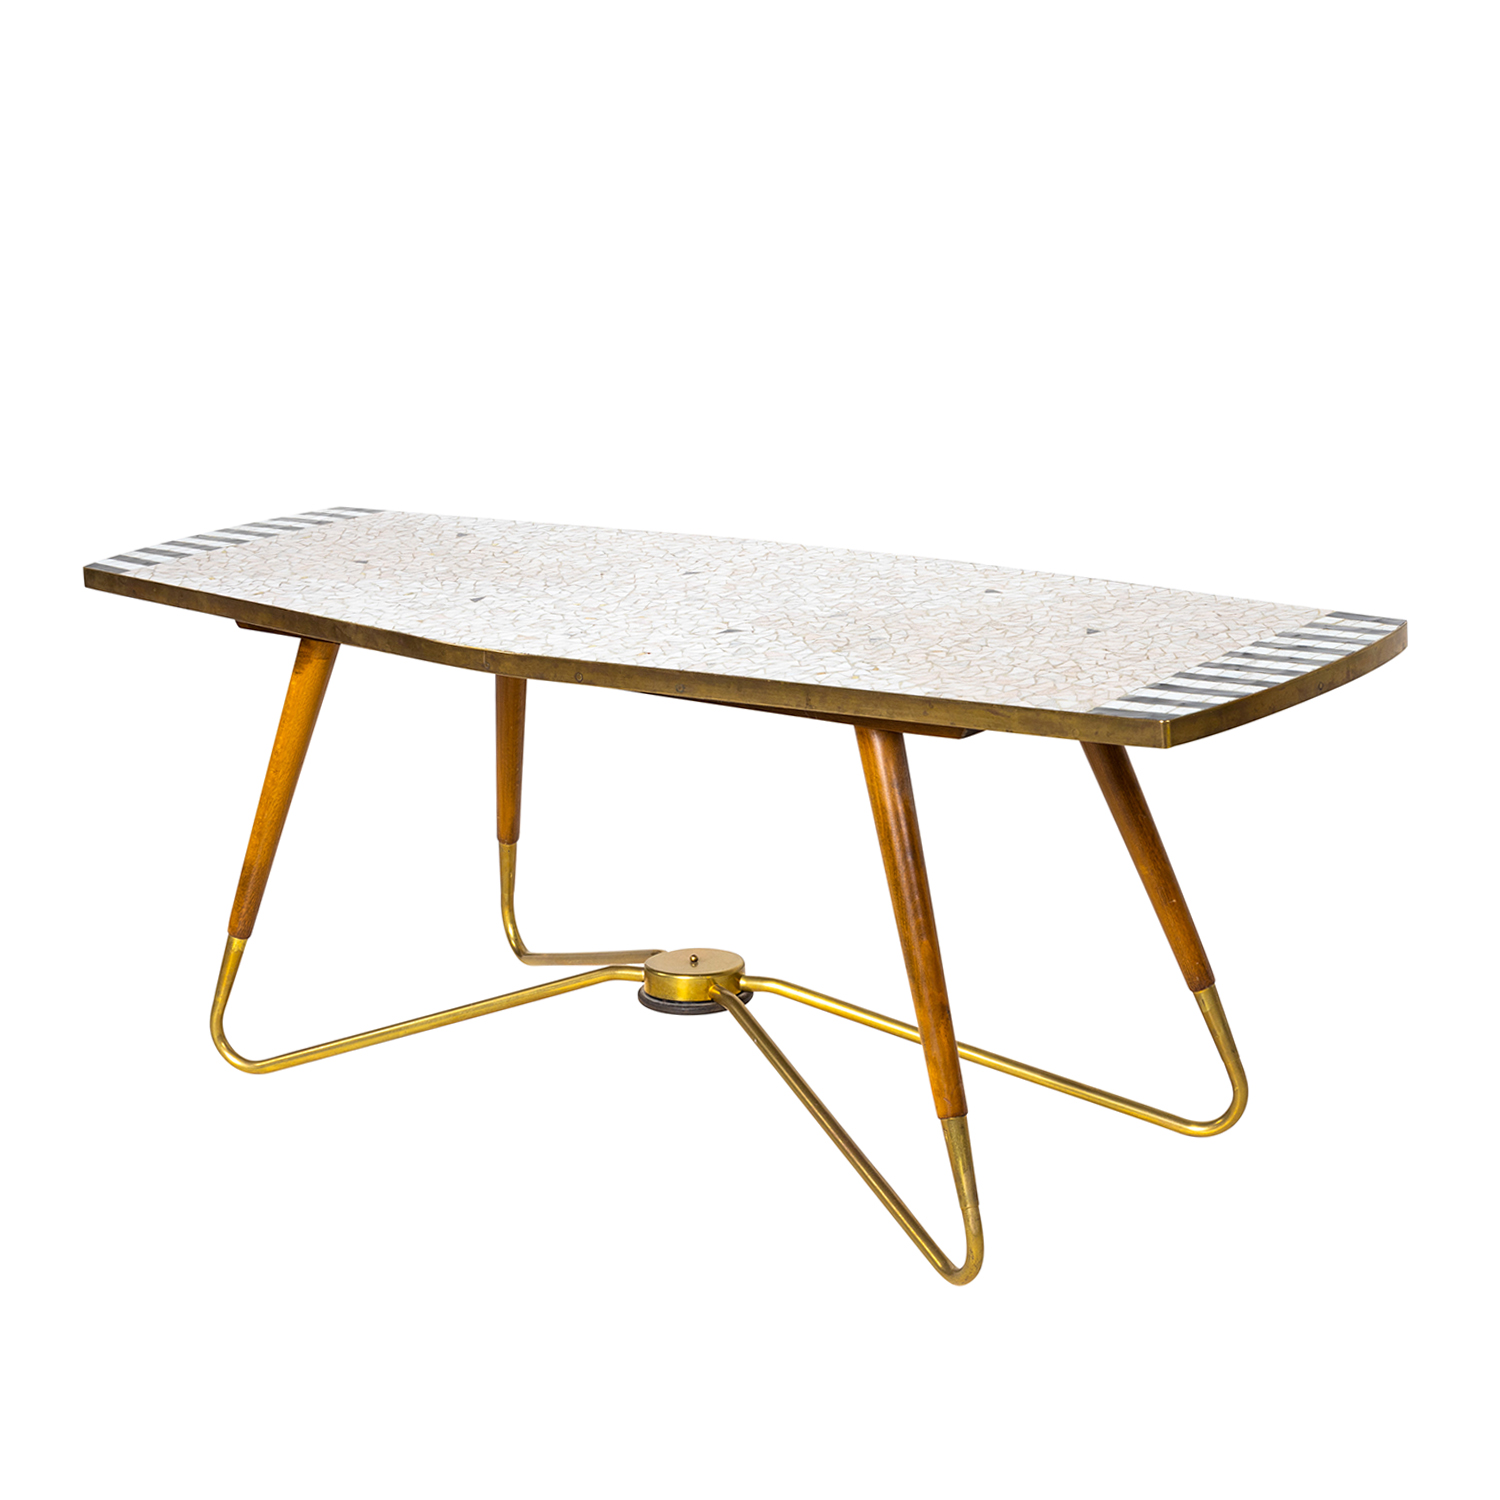 20th Century German Modern Mosaic Coffee Table – Walnut Sofa Table by Ilse Möbel